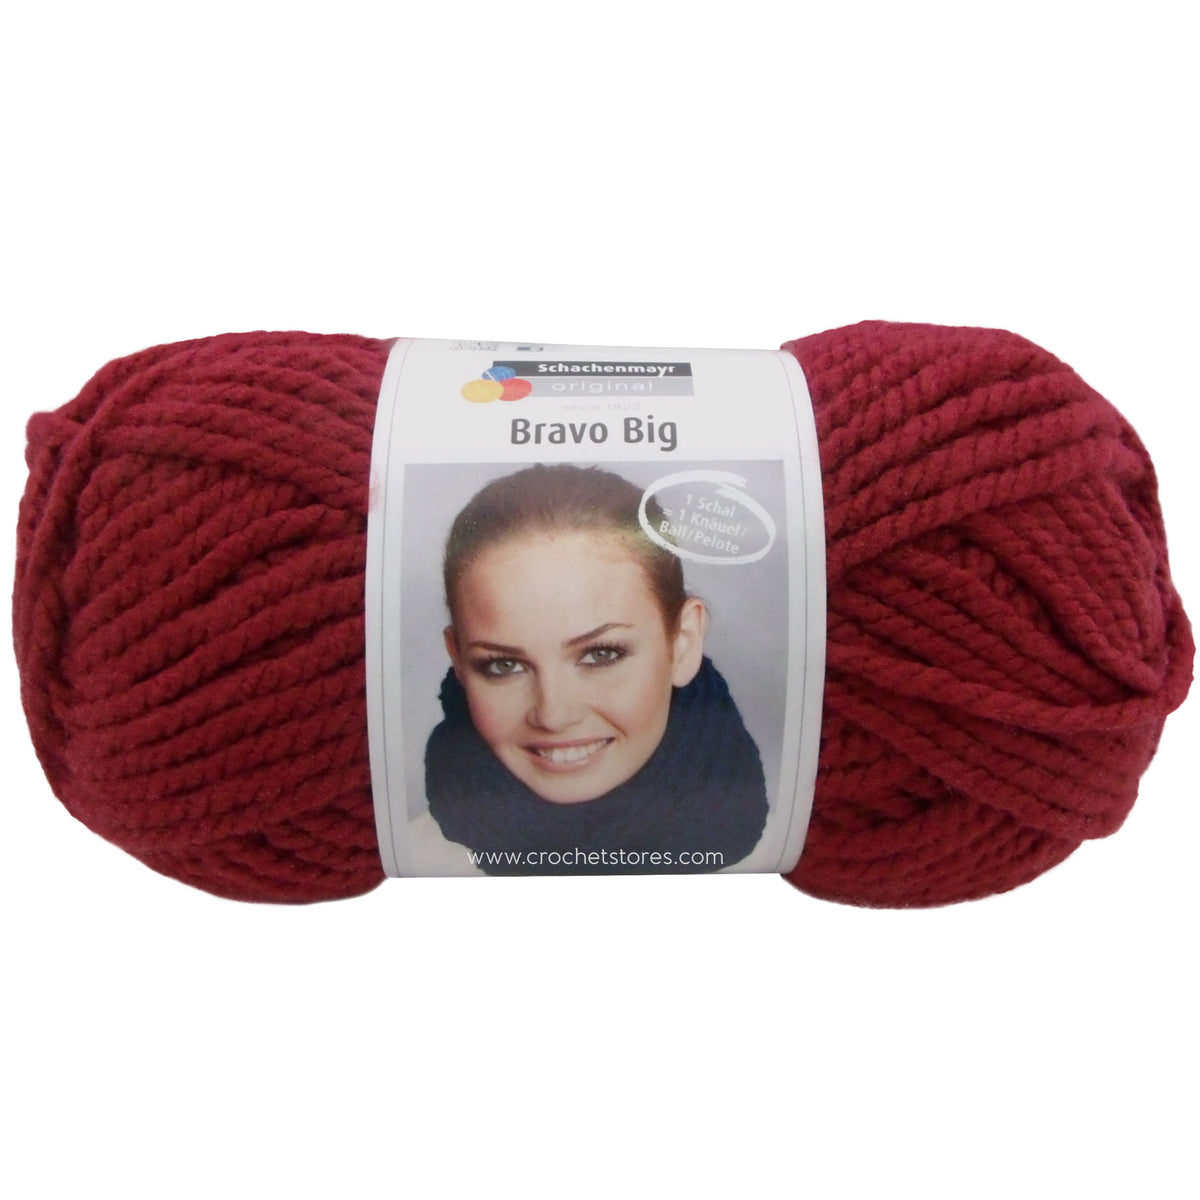 BRAVO BIG - Crochetstores9807705-1314082700461042